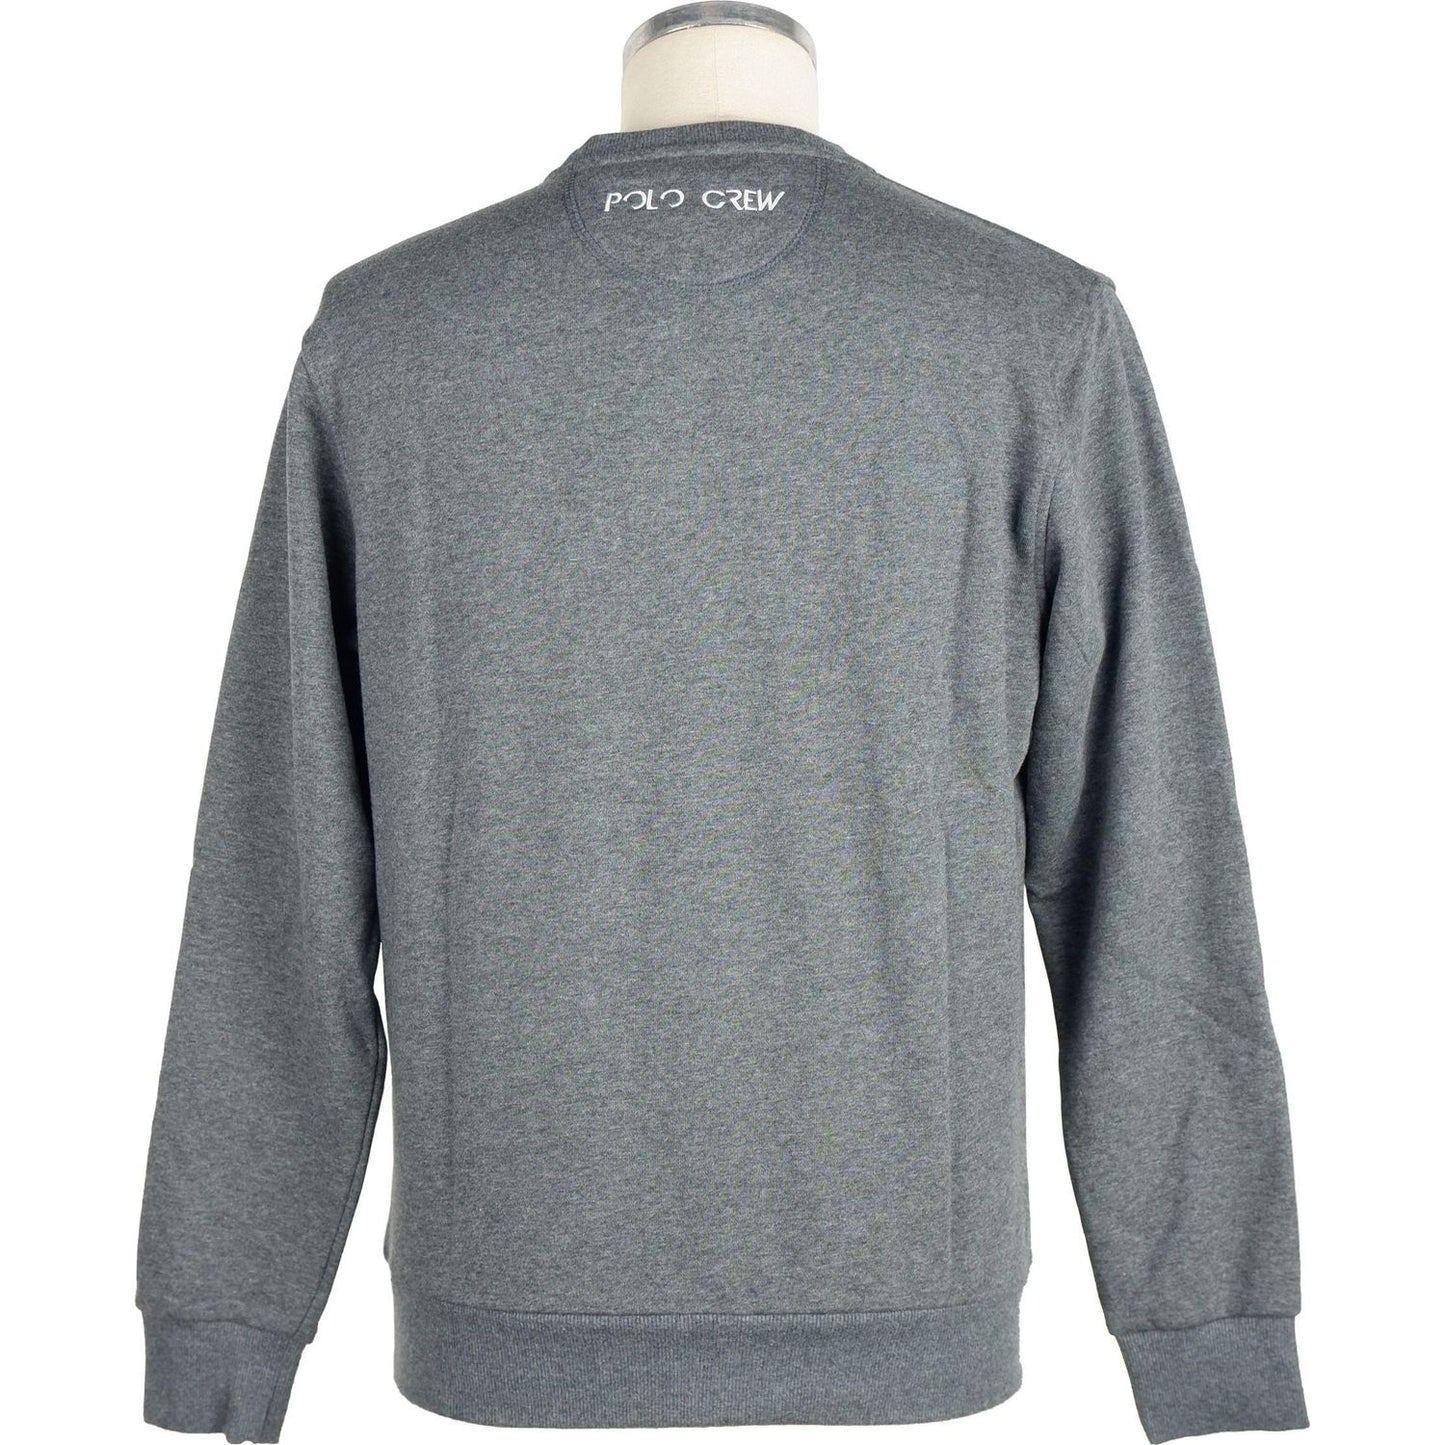 La Martina Elegant Crewneck Logo Sweatshirt MAN SWEATERS gray-cotton-sweater-5 product-7678-607665137-1-scaled-80bcdc28-c0c.jpg